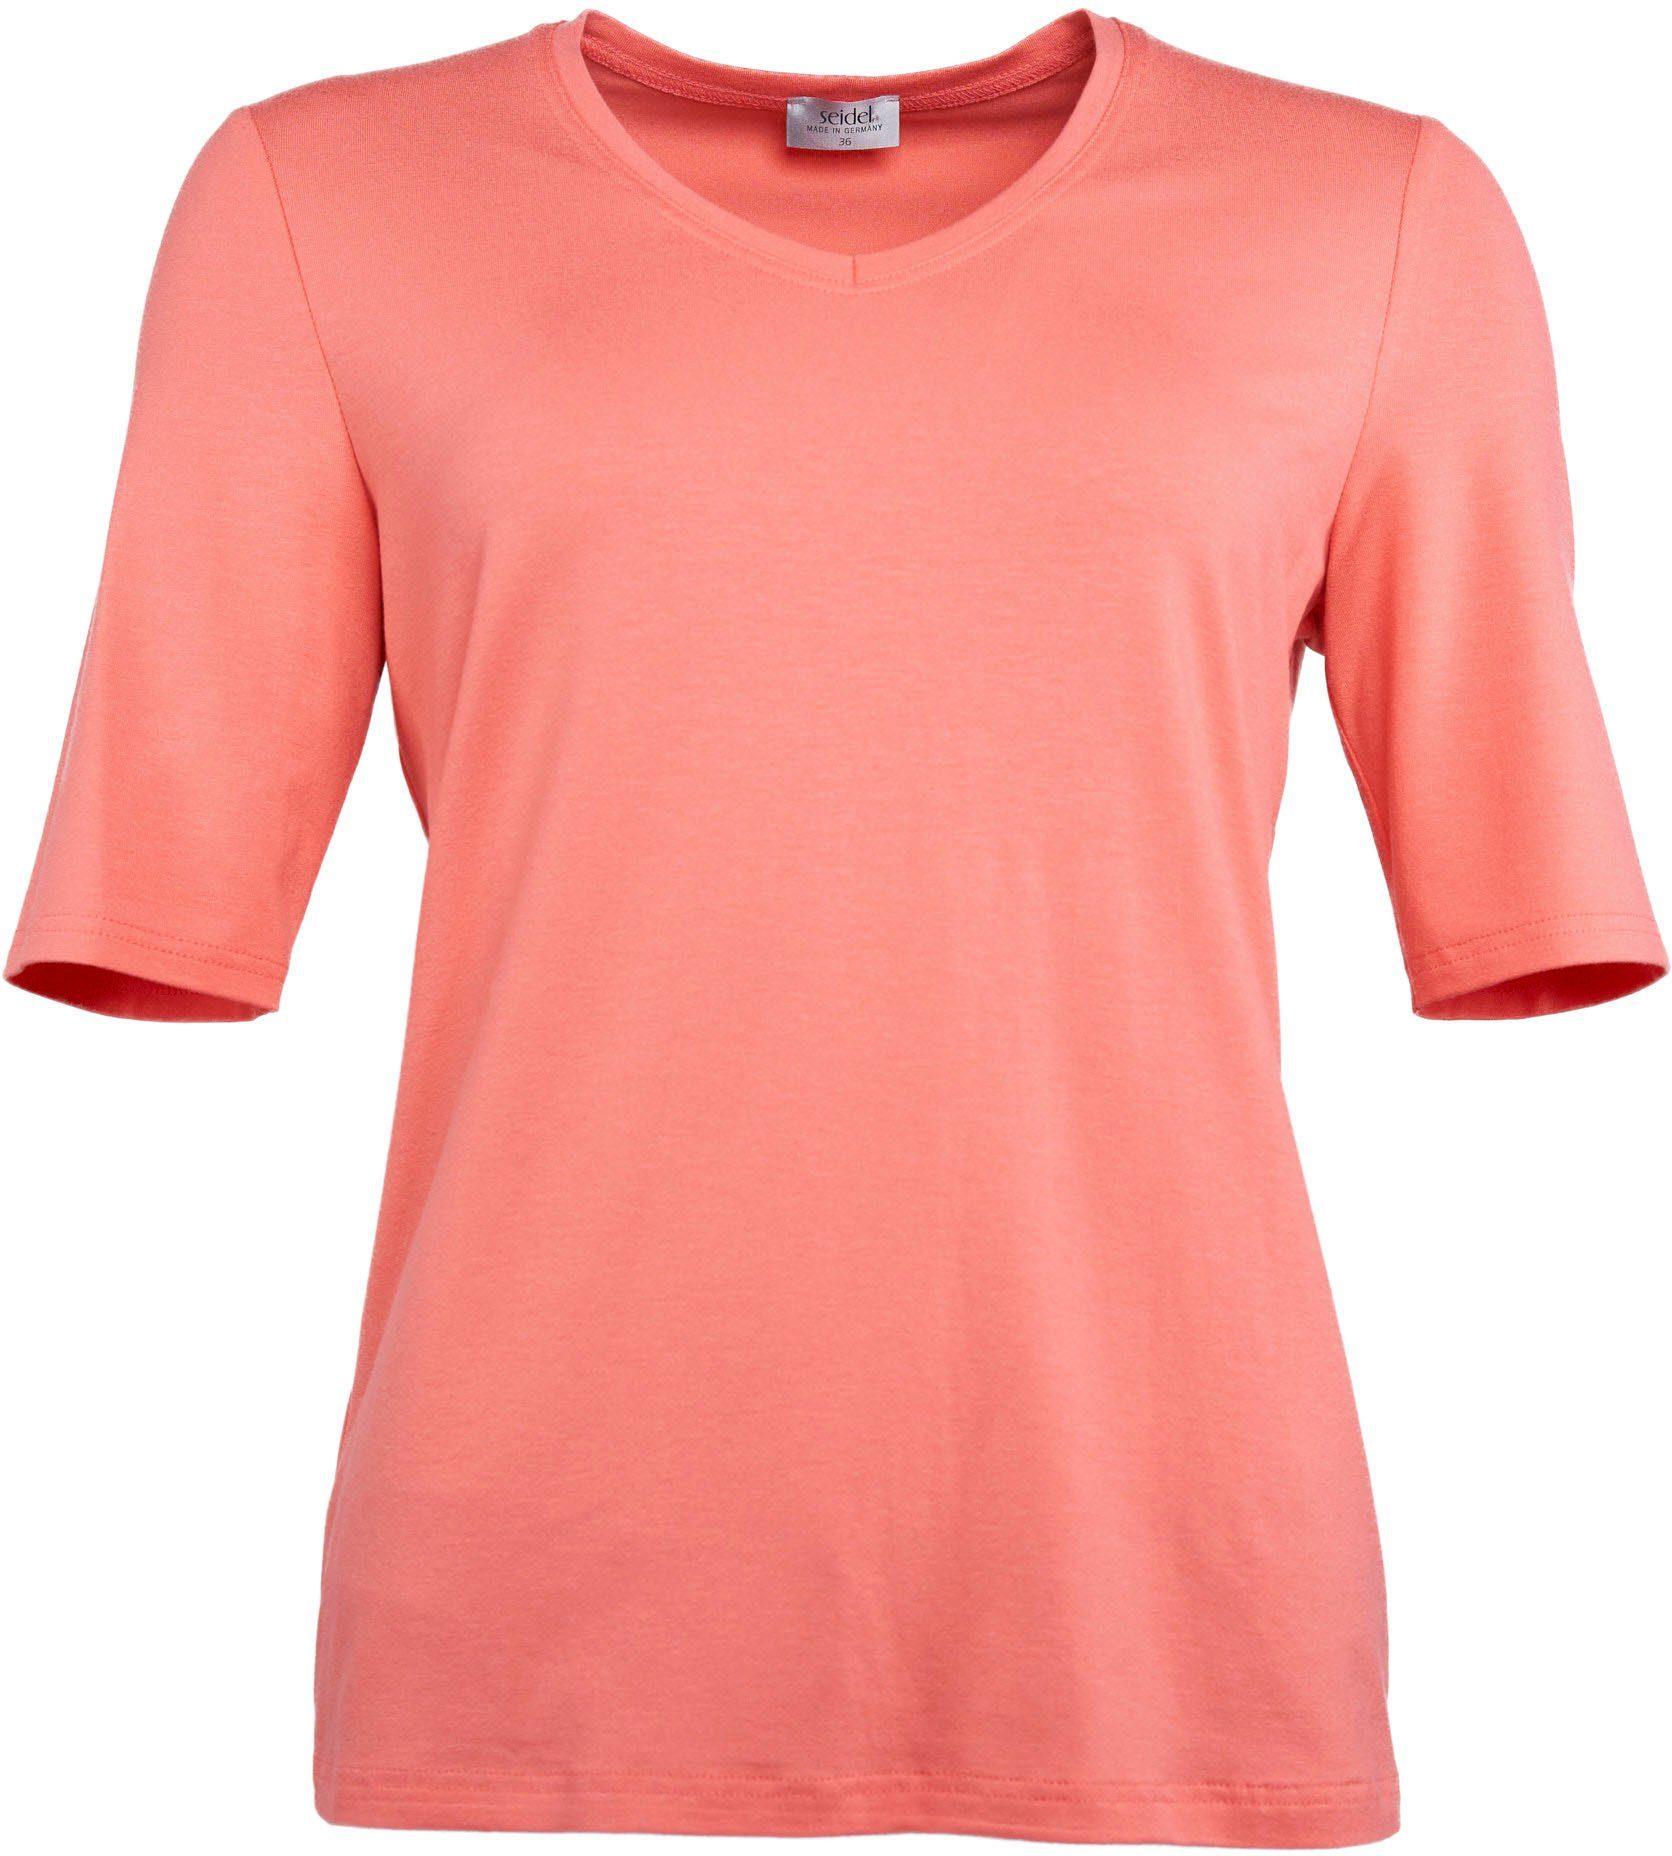 Moden softem Halbarm V-Shirt MADE mit IN apricot Seidel Material, aus GERMANY